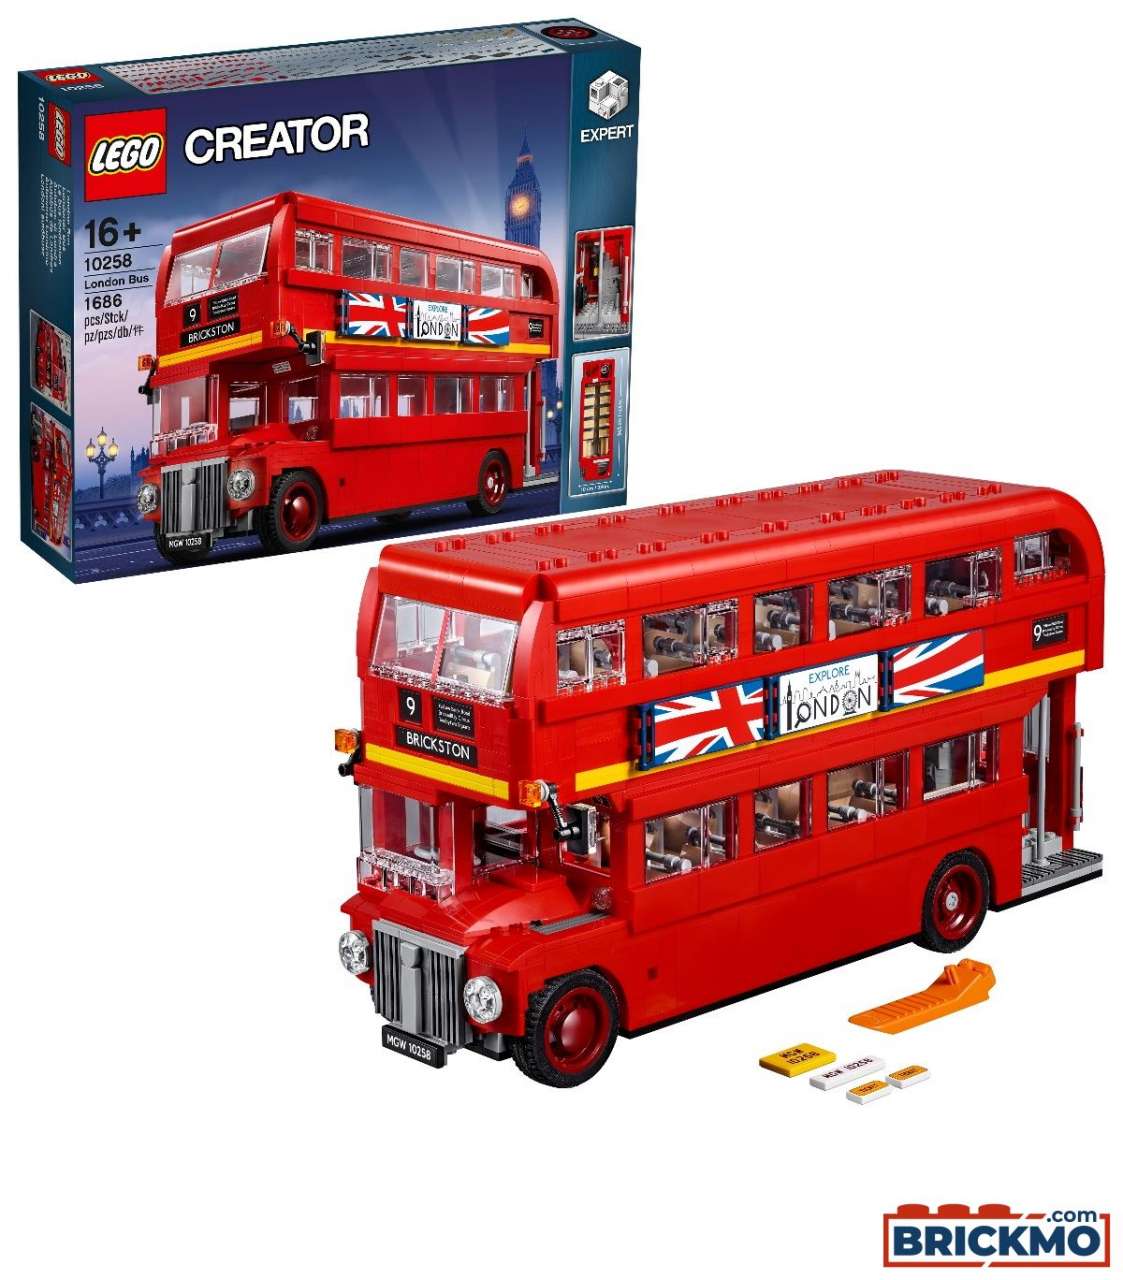 LEGO Creator 10258 Londense bus 10258